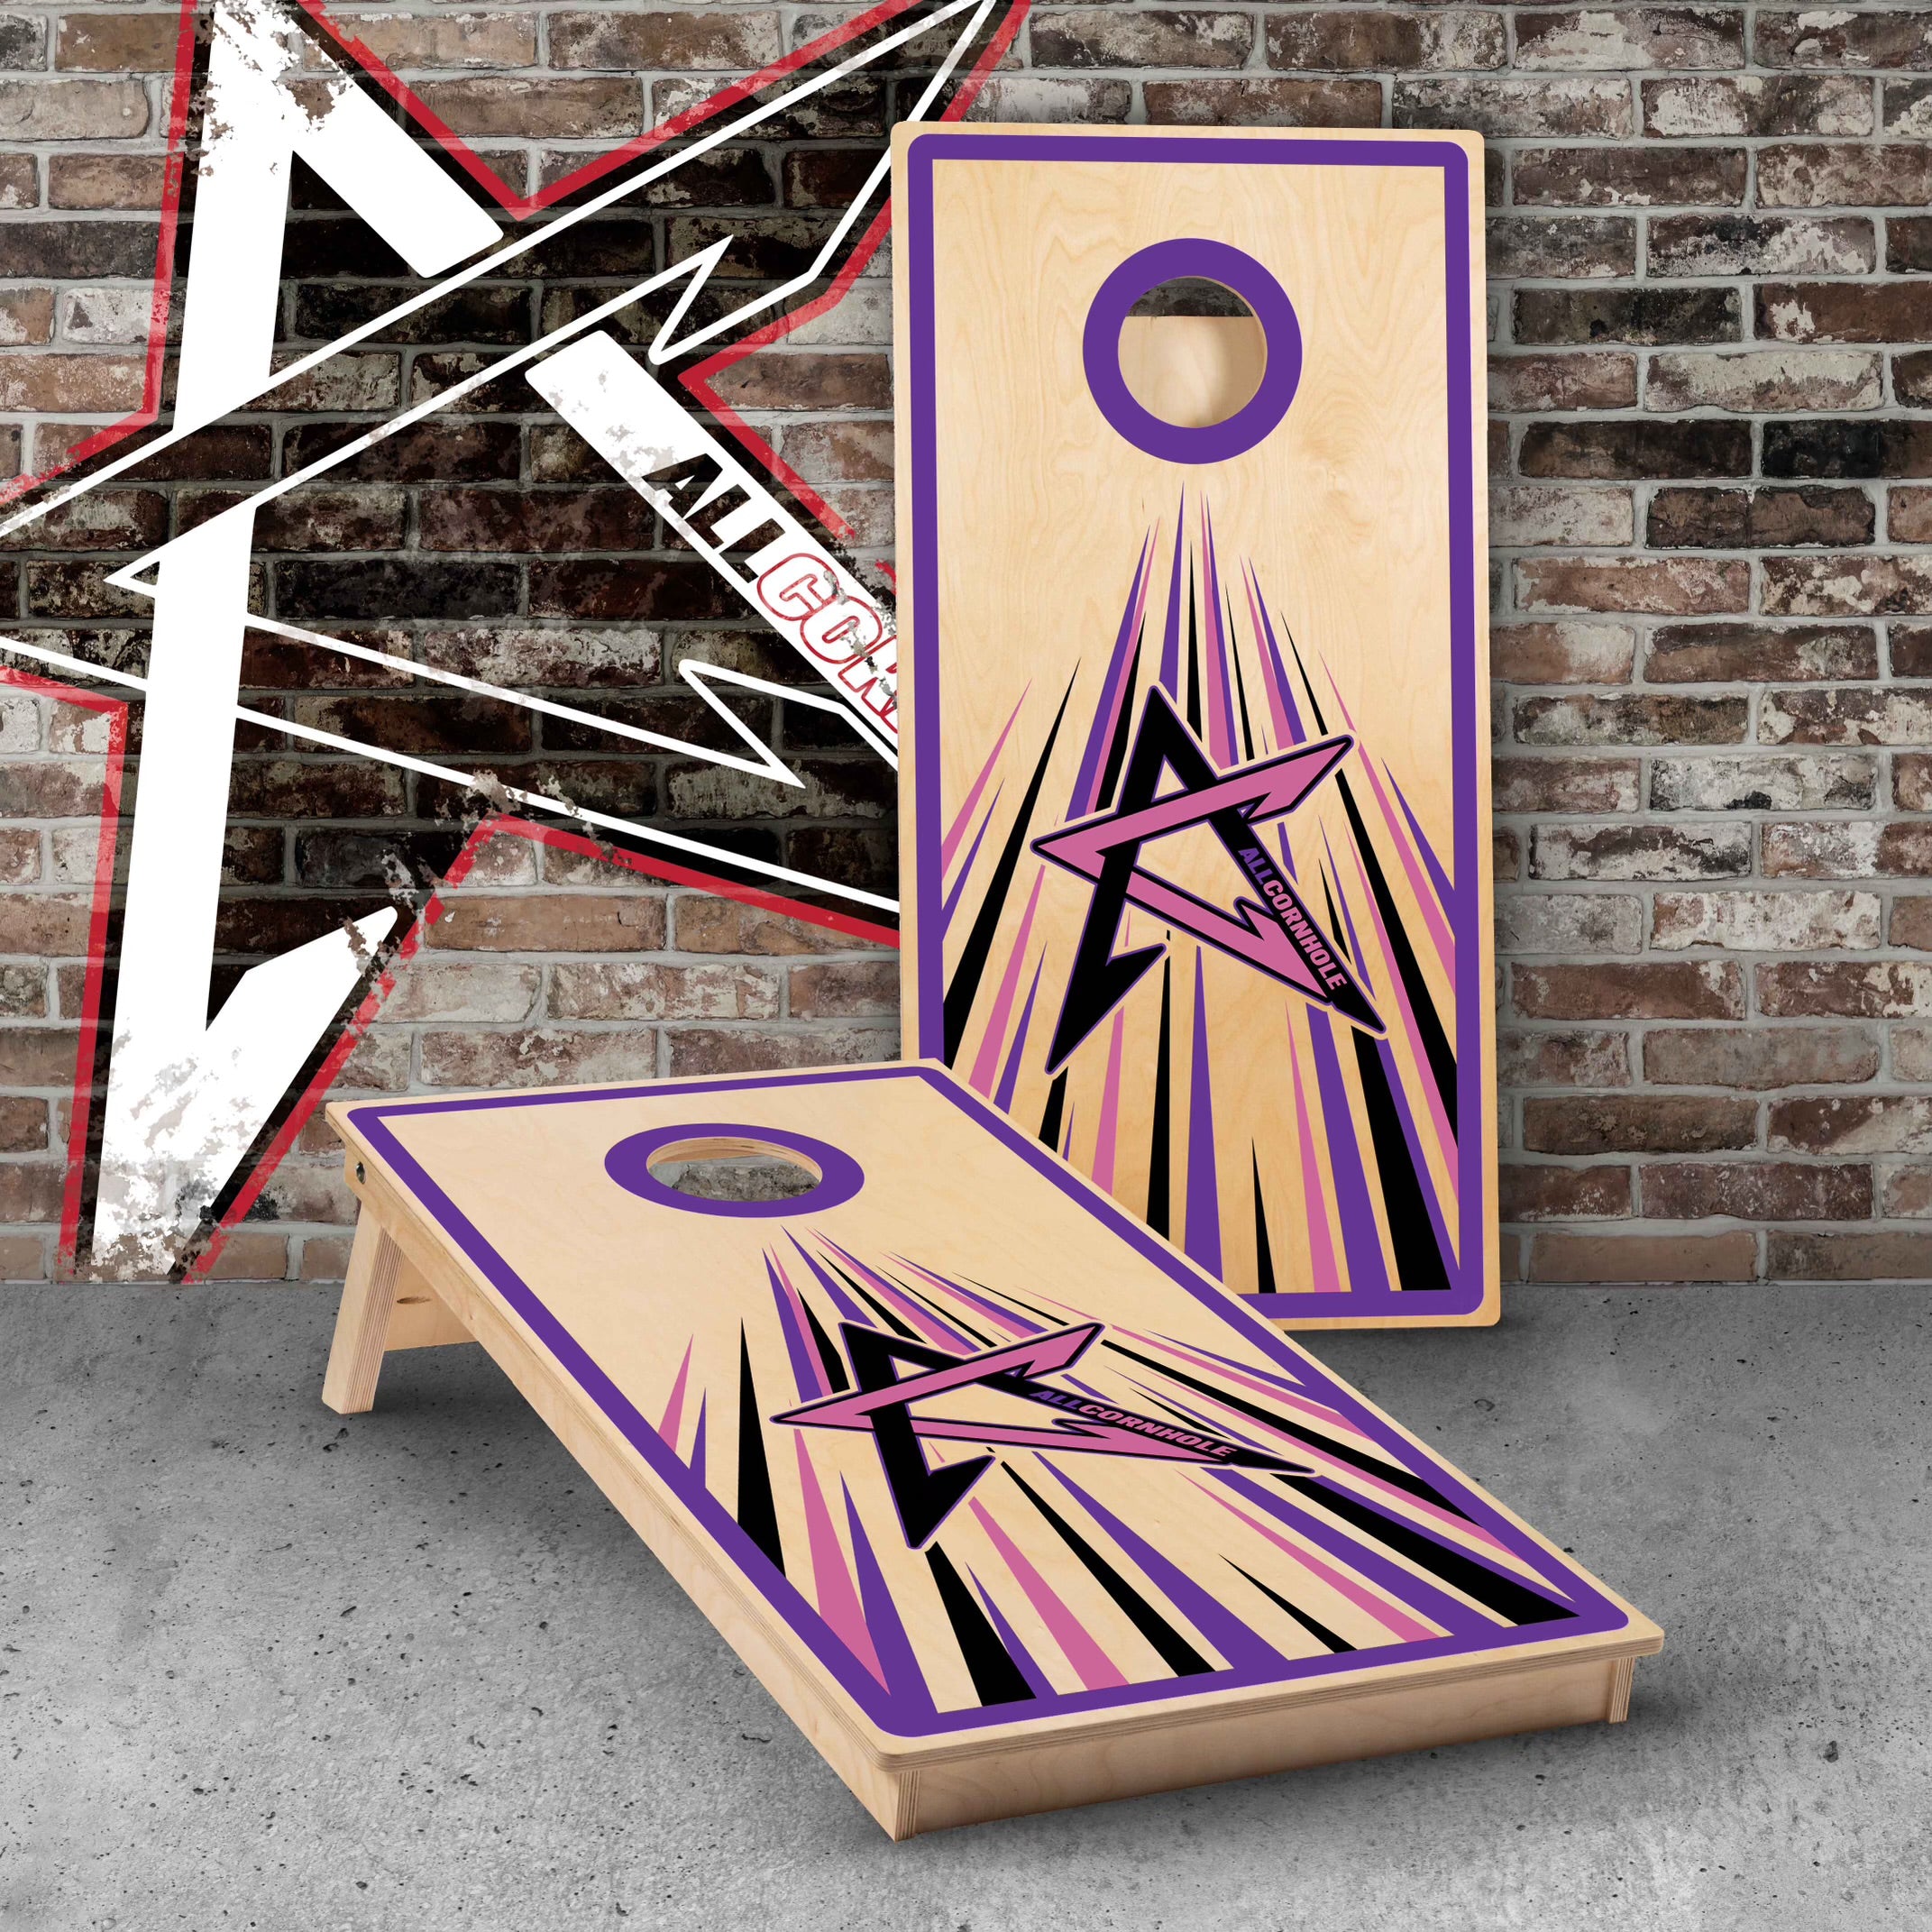 AllCornhole "Purple Directional" Boards - Multiple Models